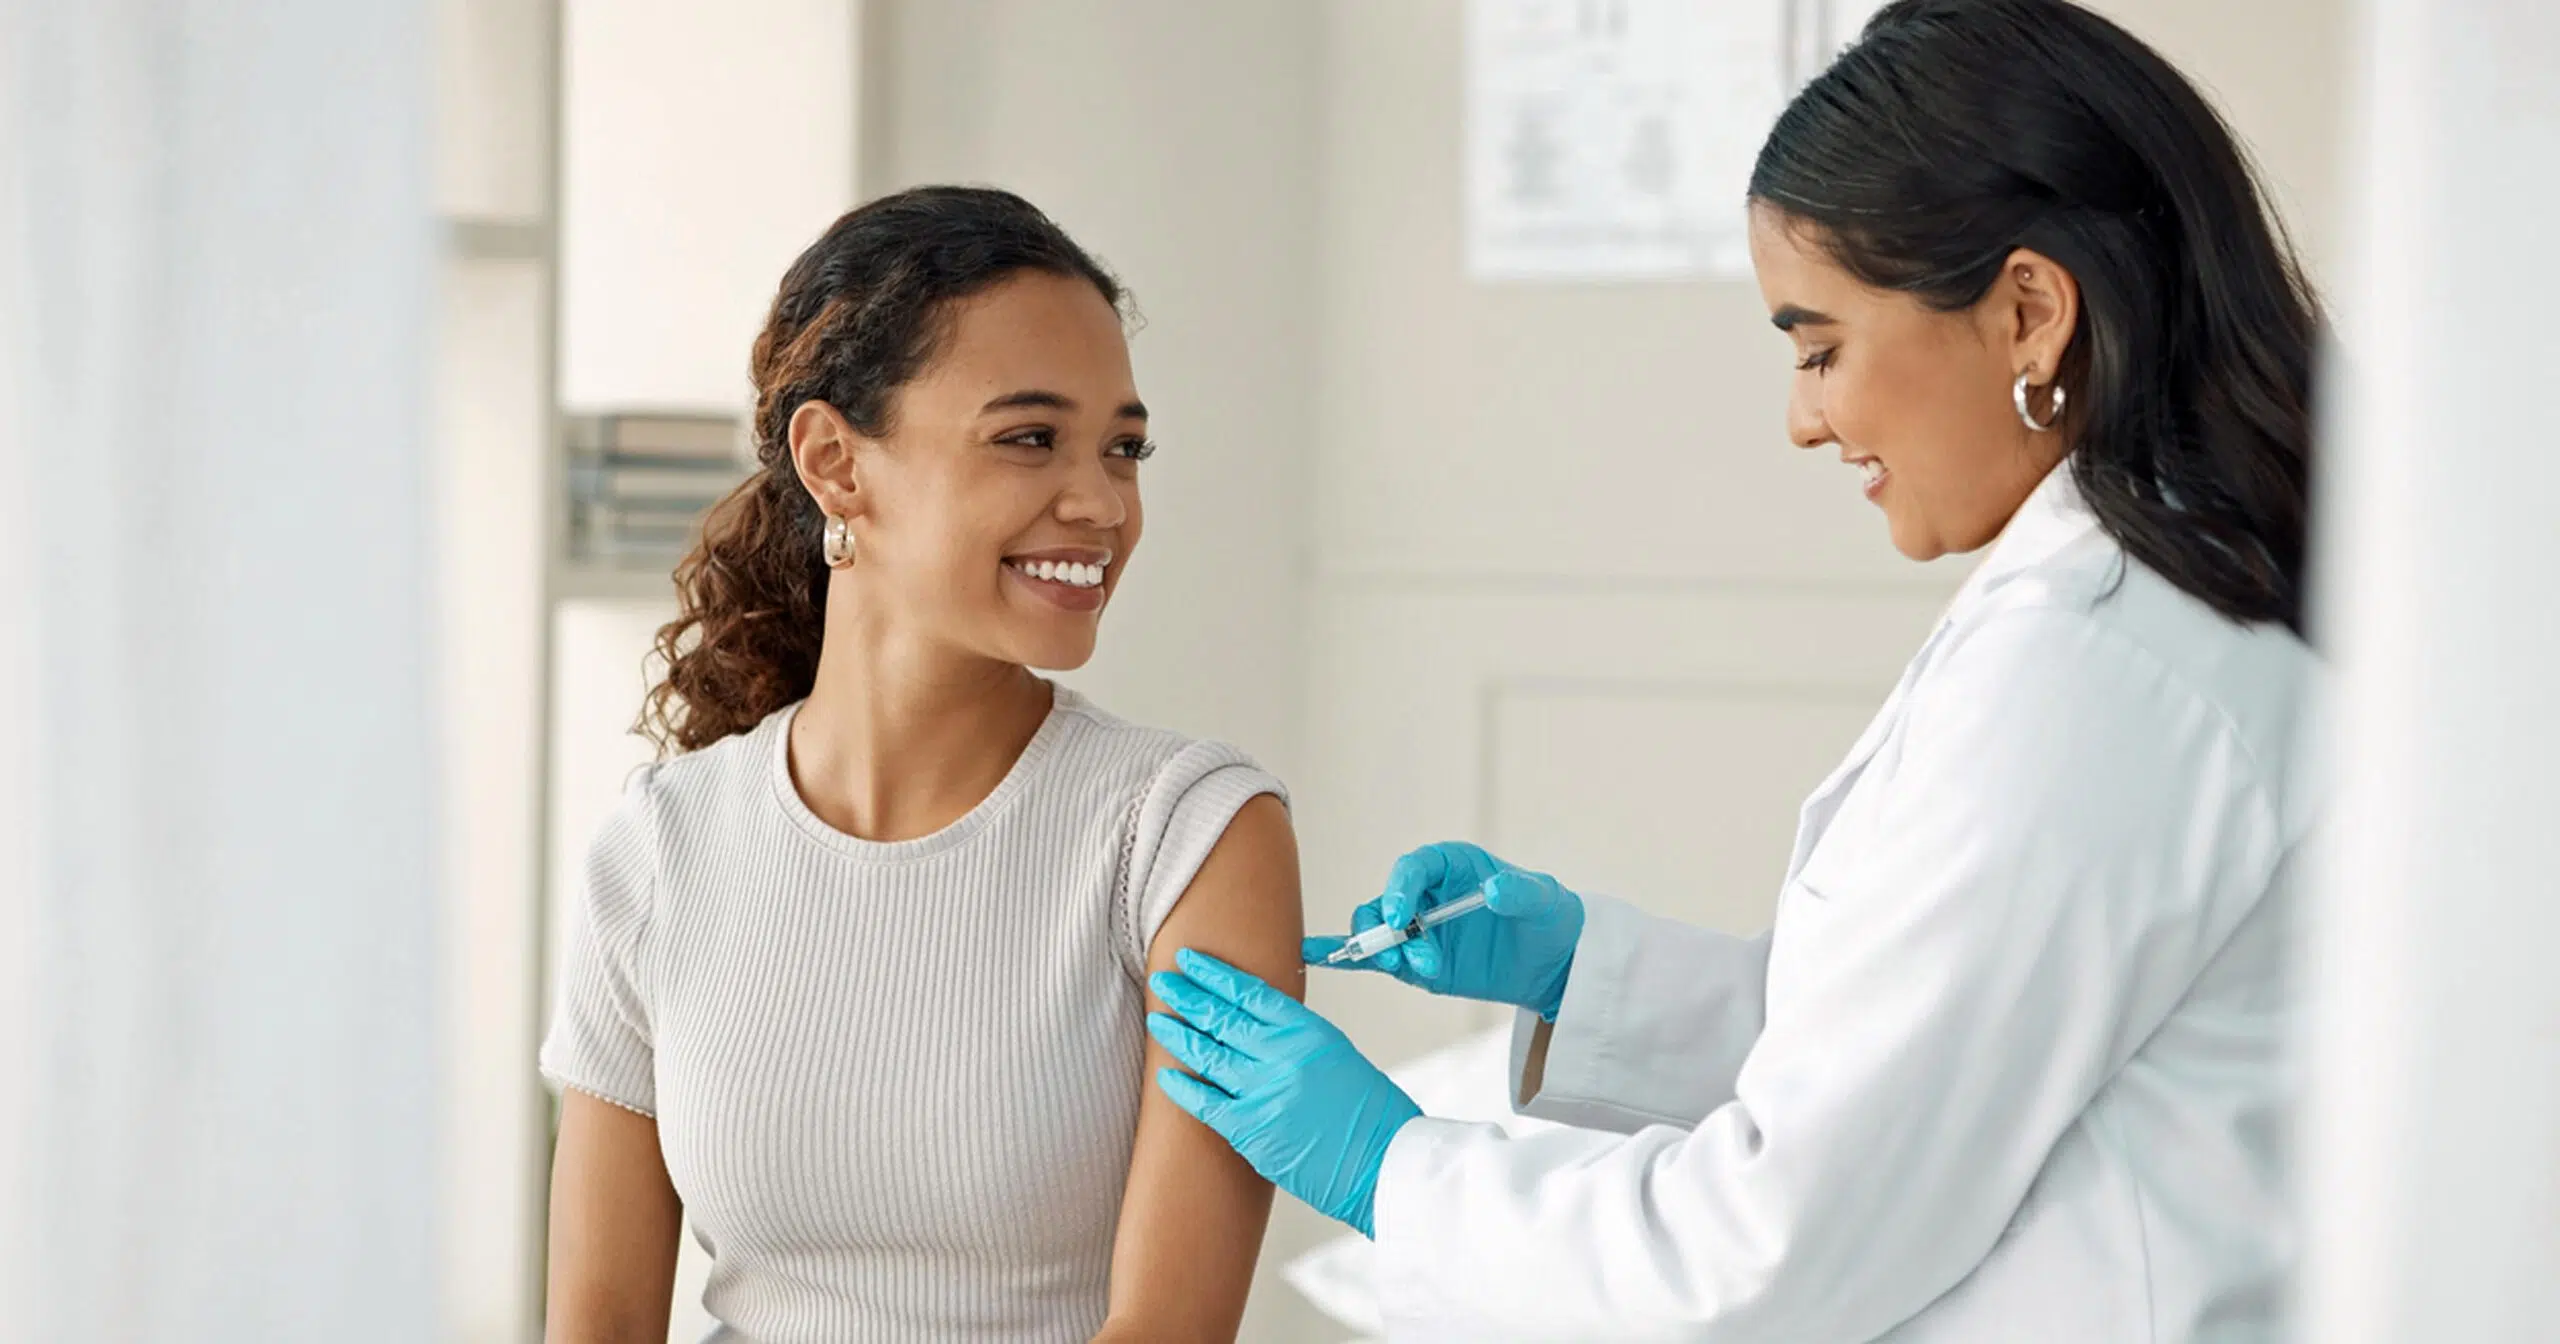 Preventative Medicine through Vaccination